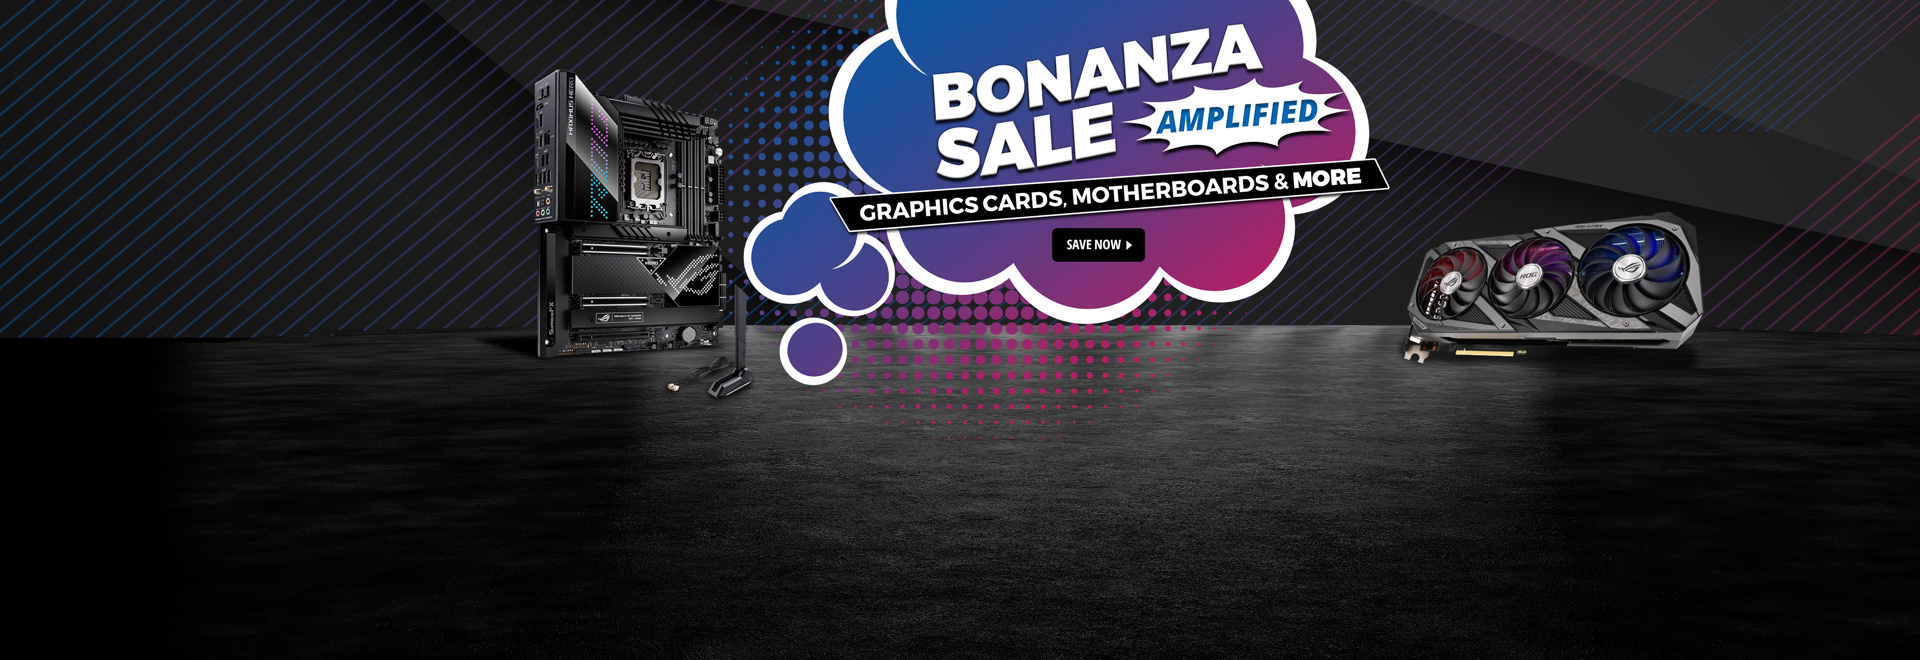 Bonanza Sale Amplified